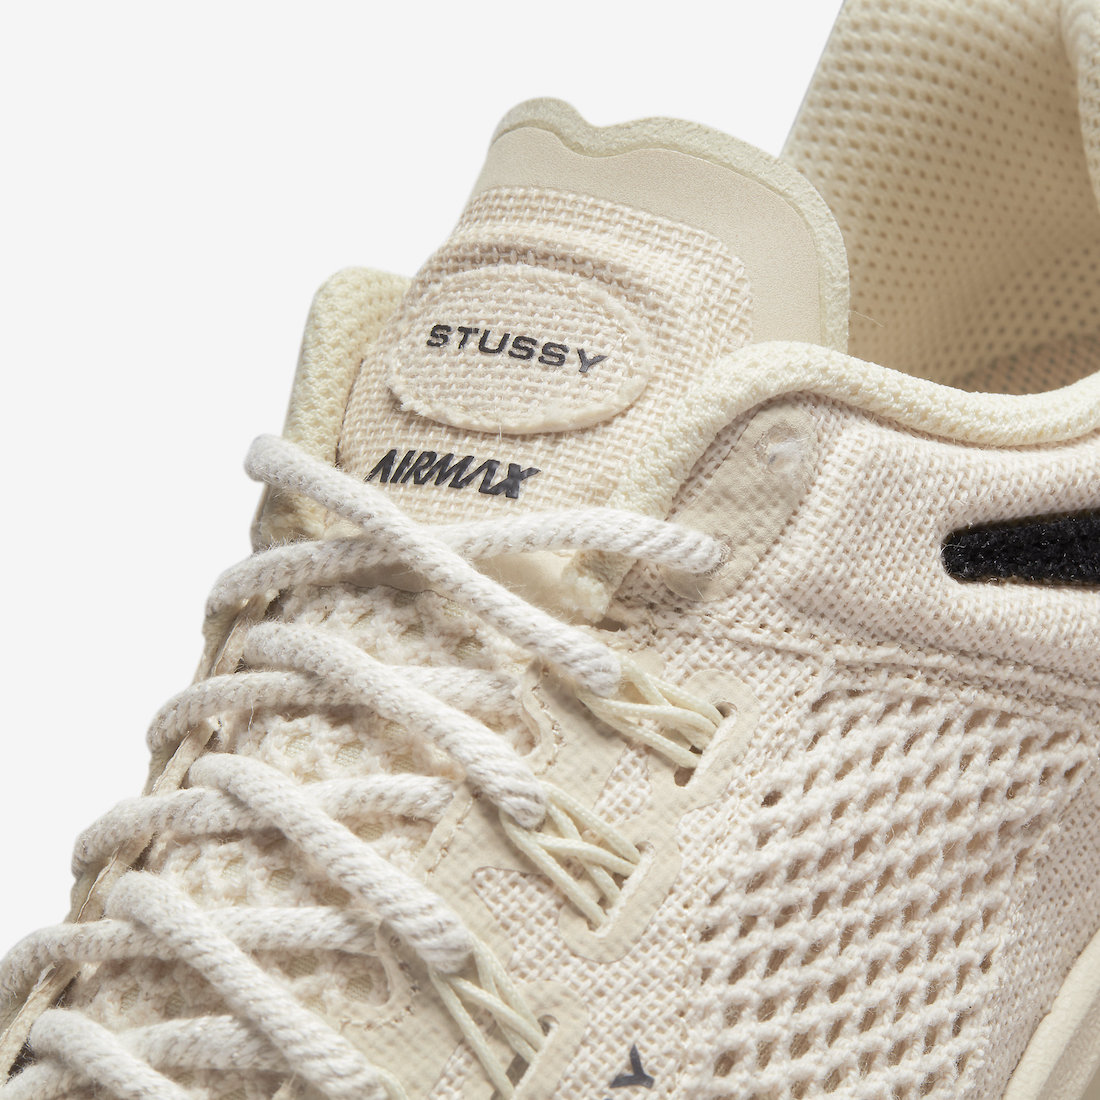 Stussy Nike Air Max 2015 Fossil DM6447-200 Fecha de lanzamiento